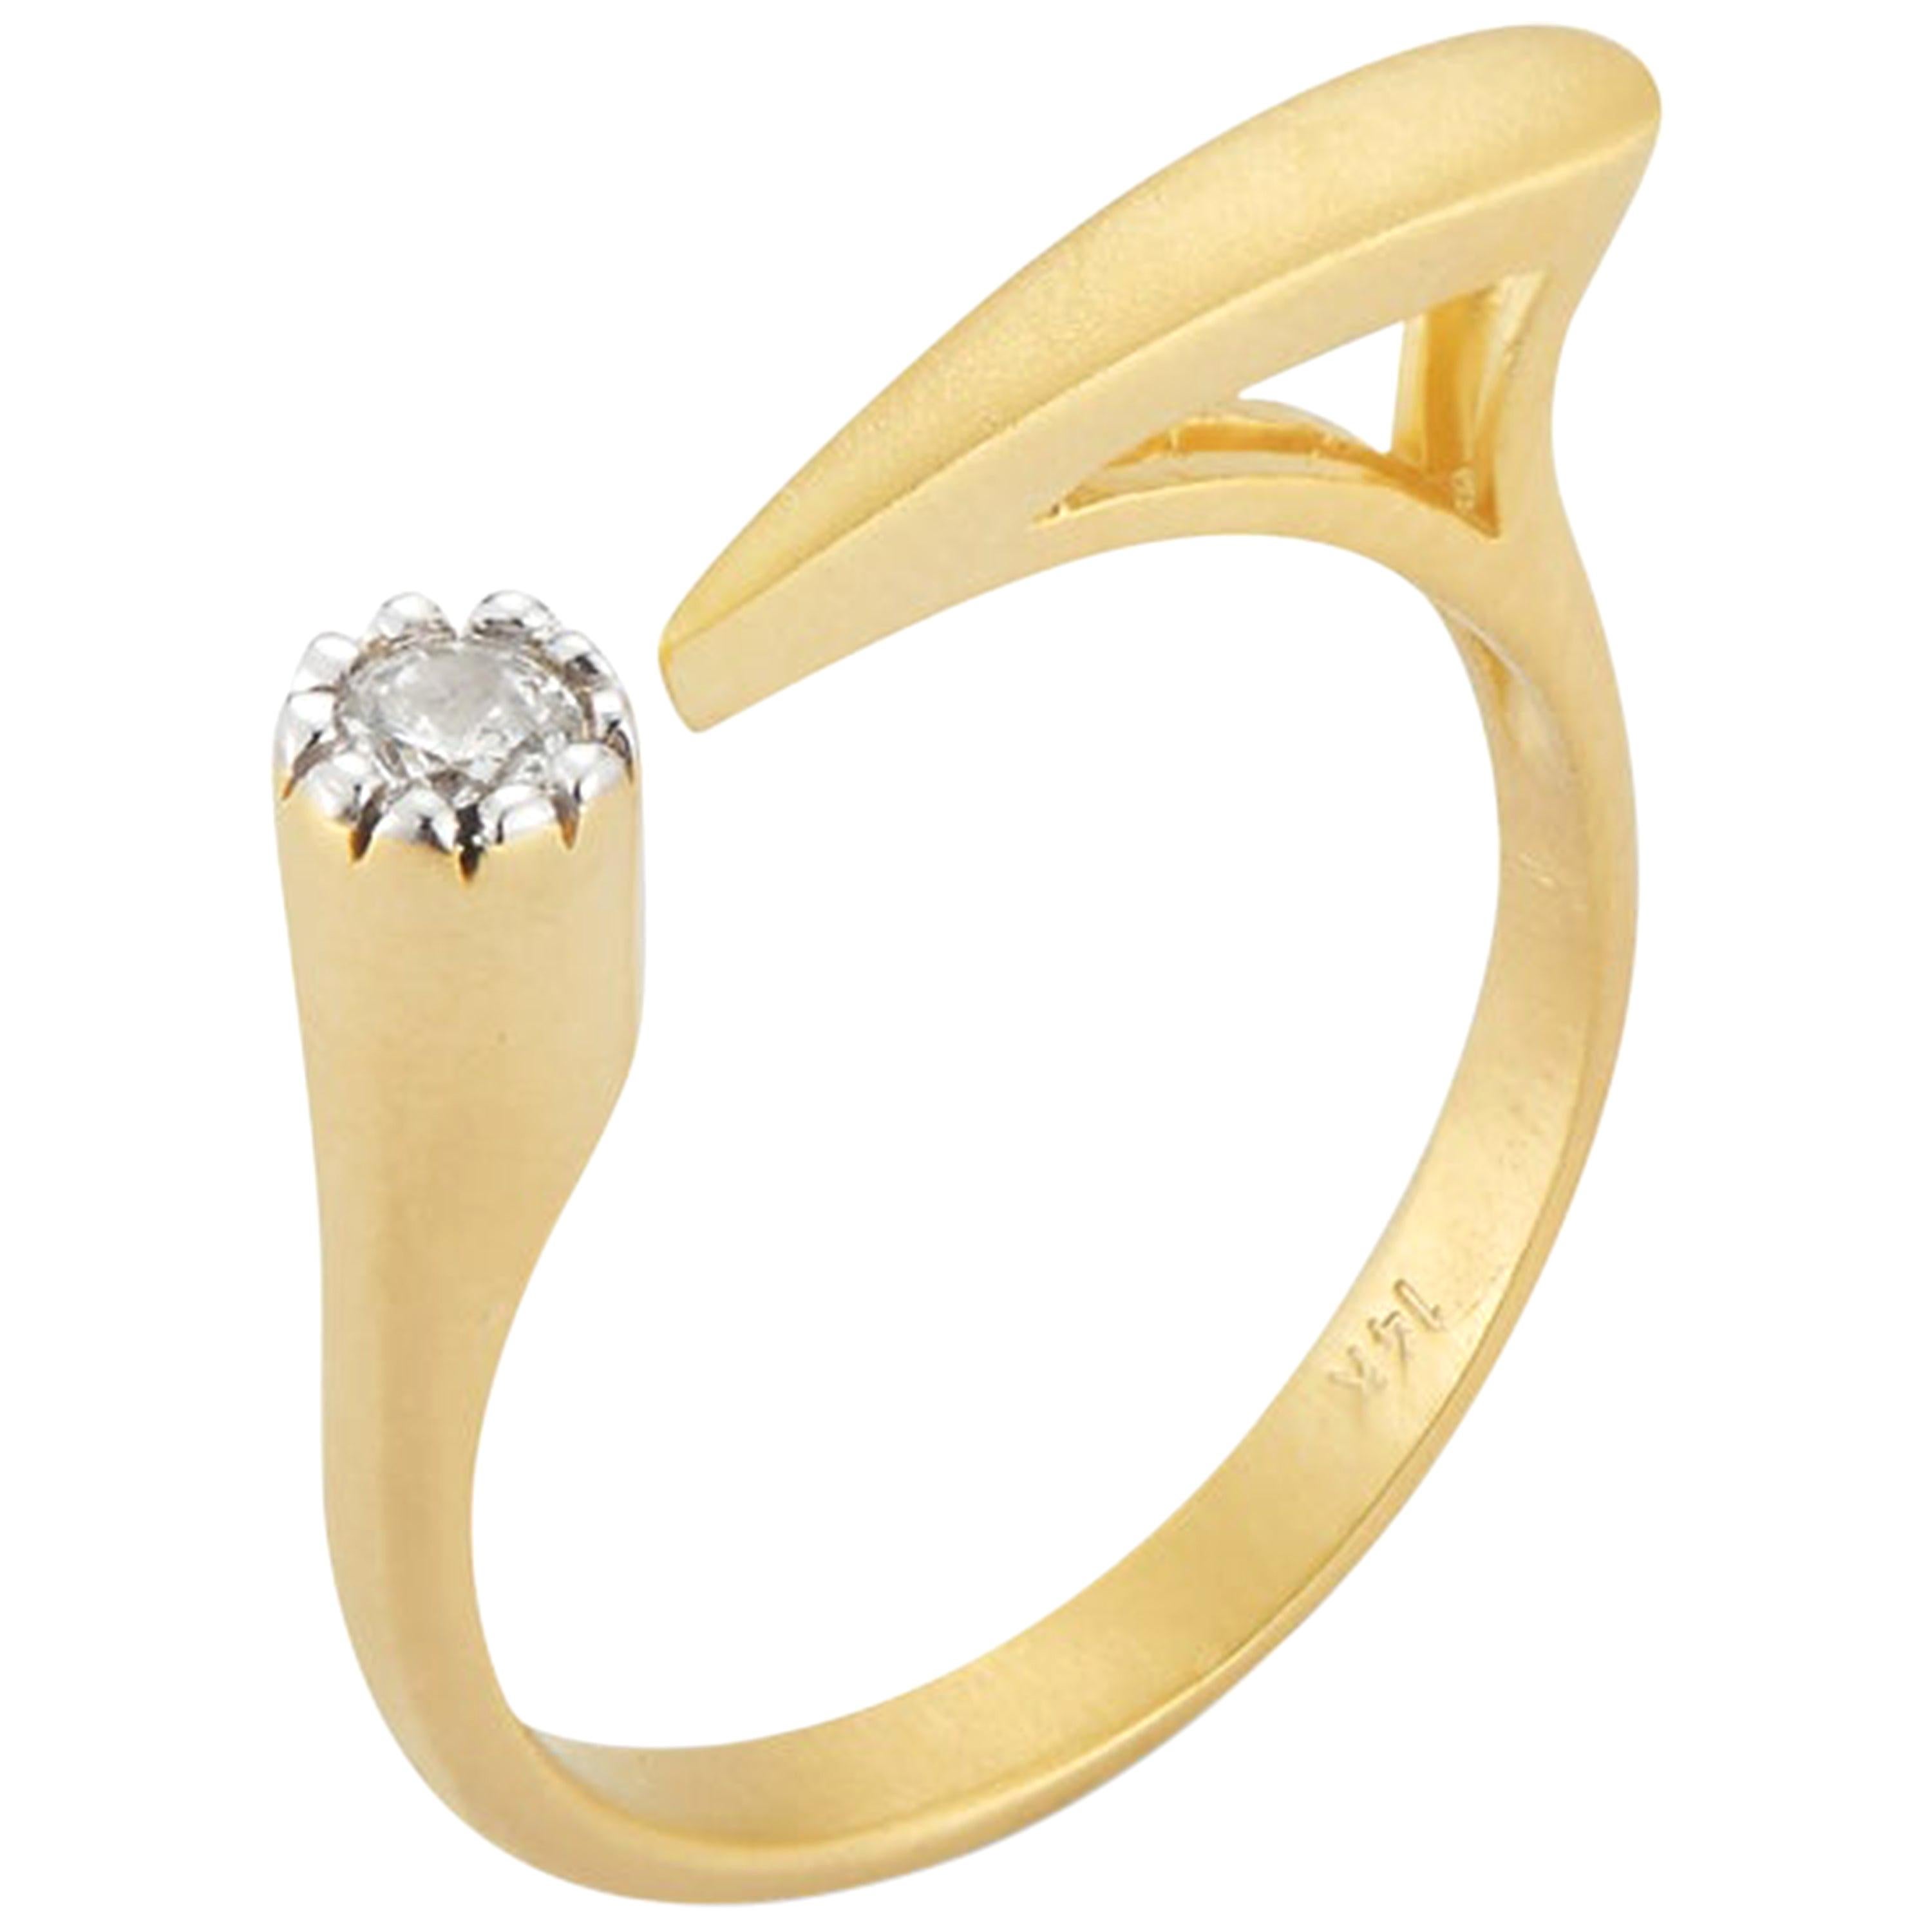 Handcrafted 14 Karat Yellow Gold Gap Ring